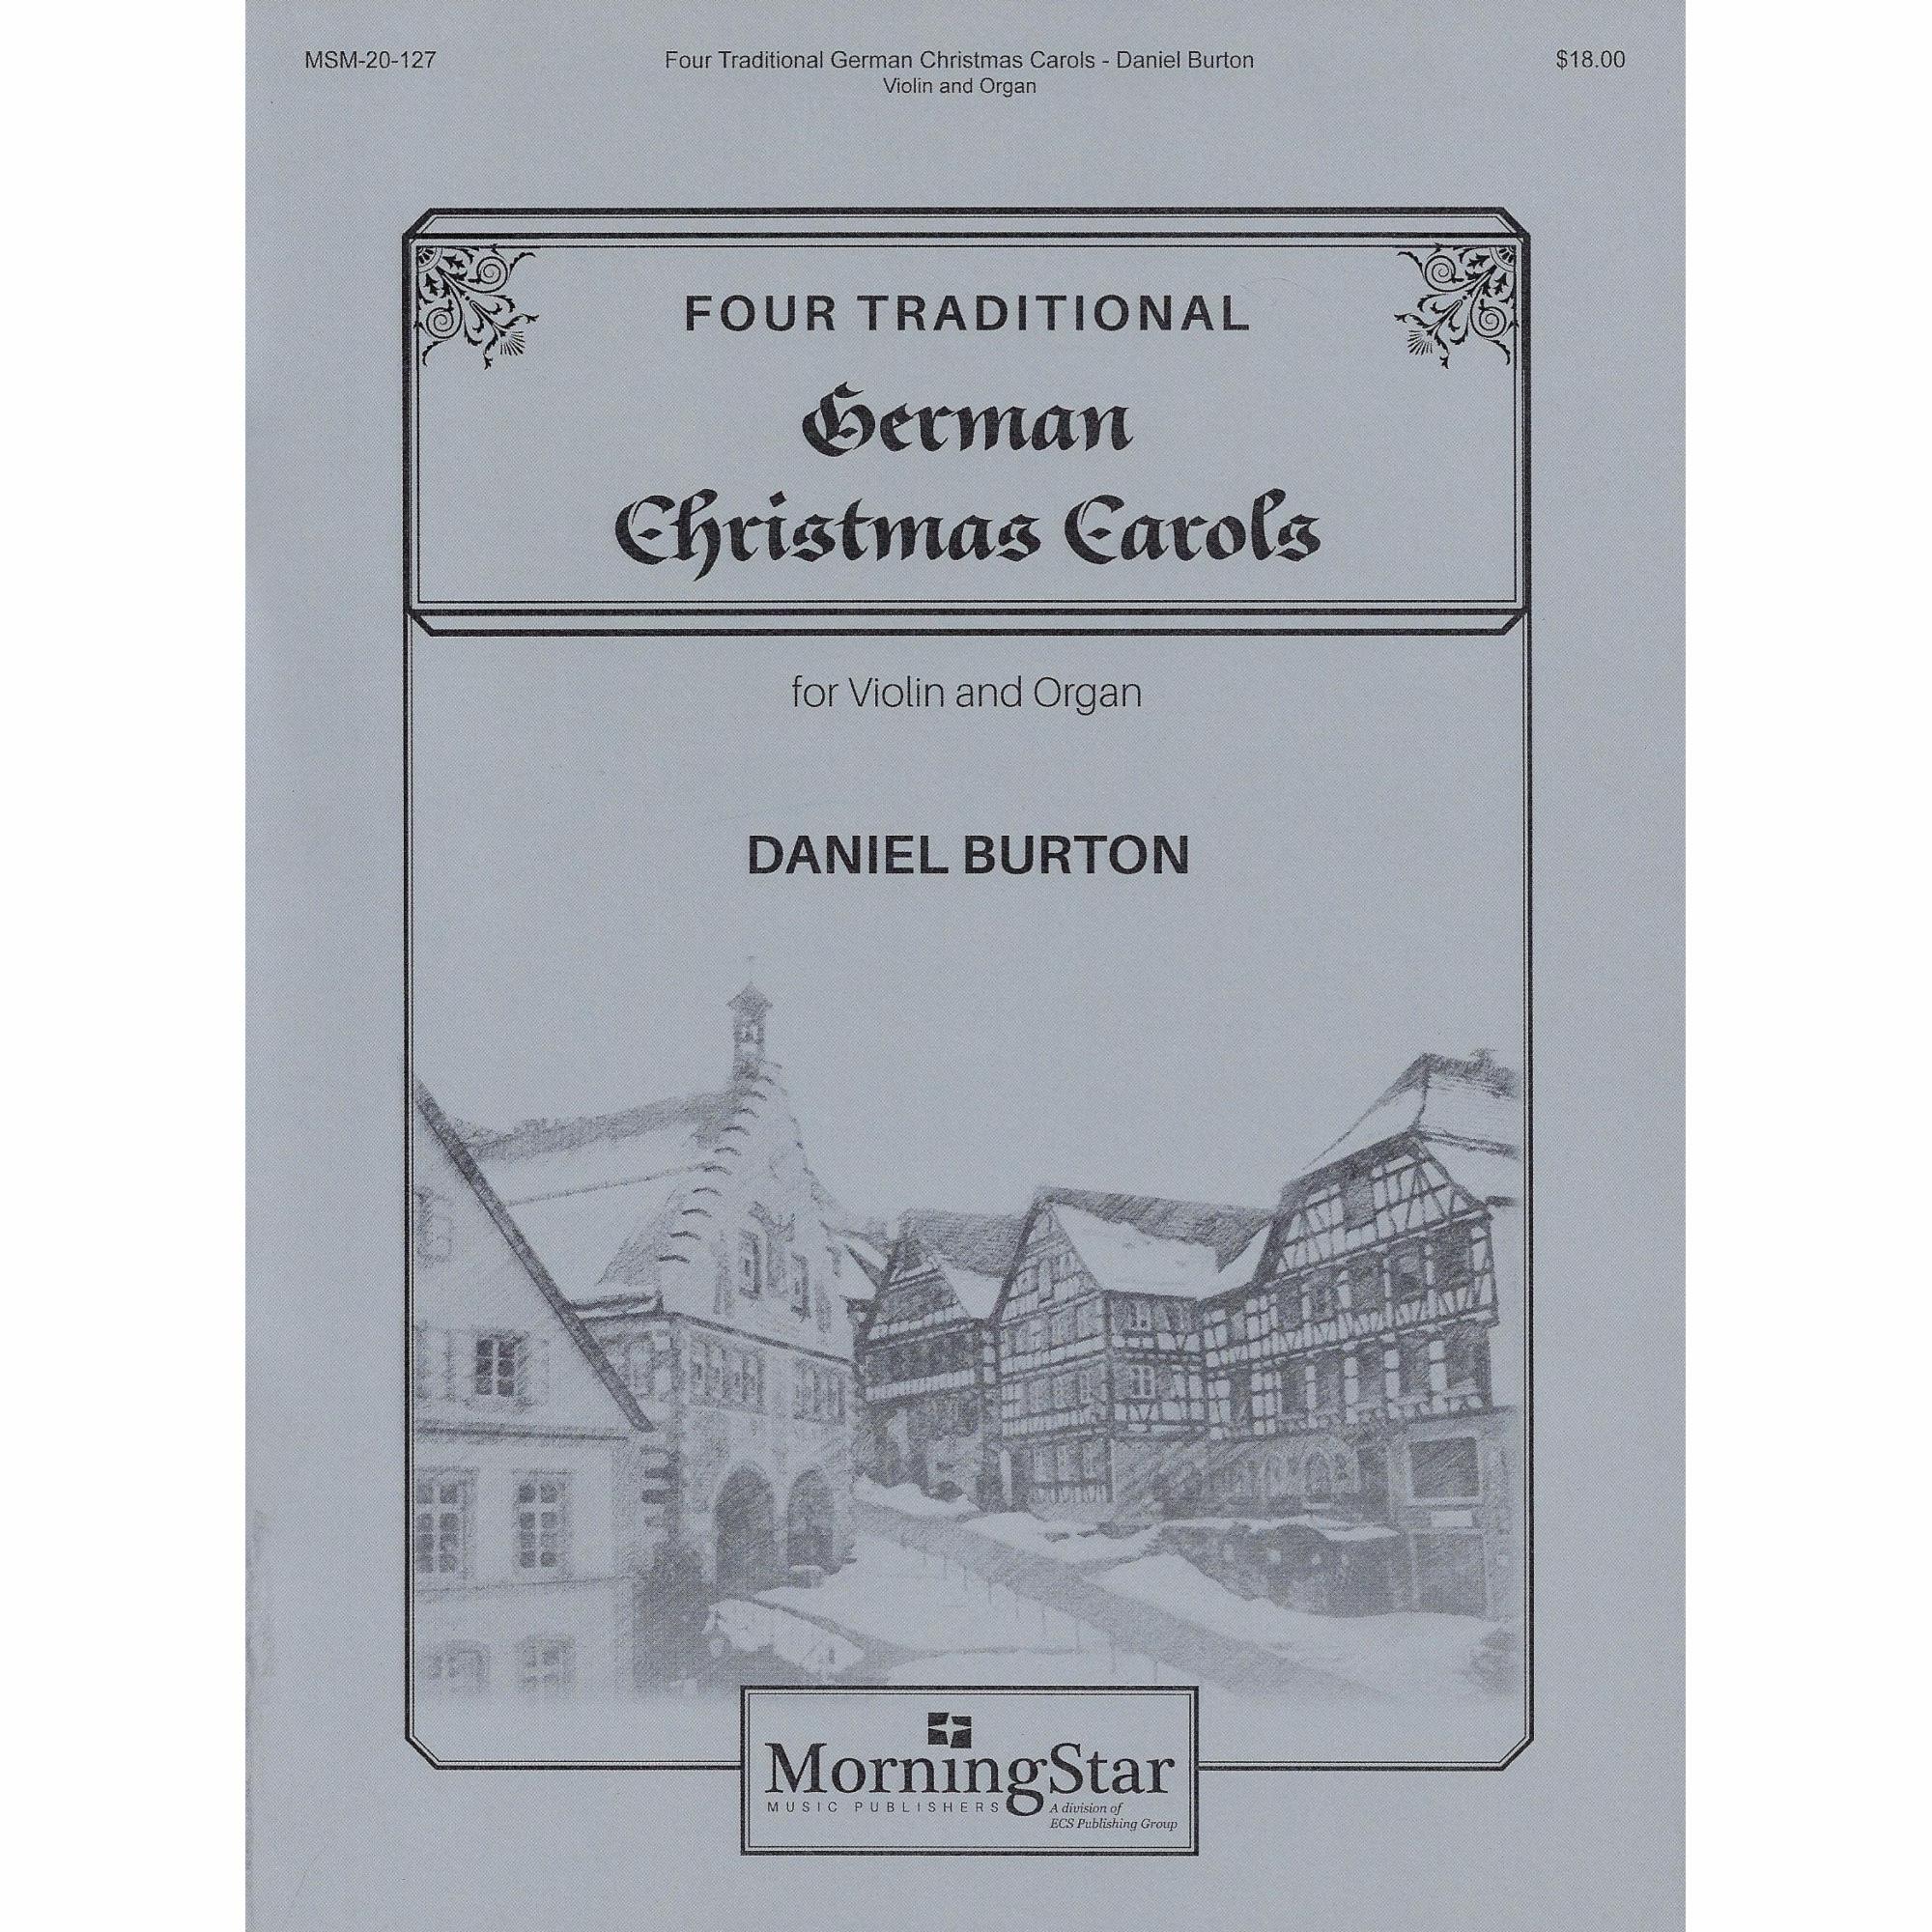 Four Traditional German Christmas Carols for Violin and Organ